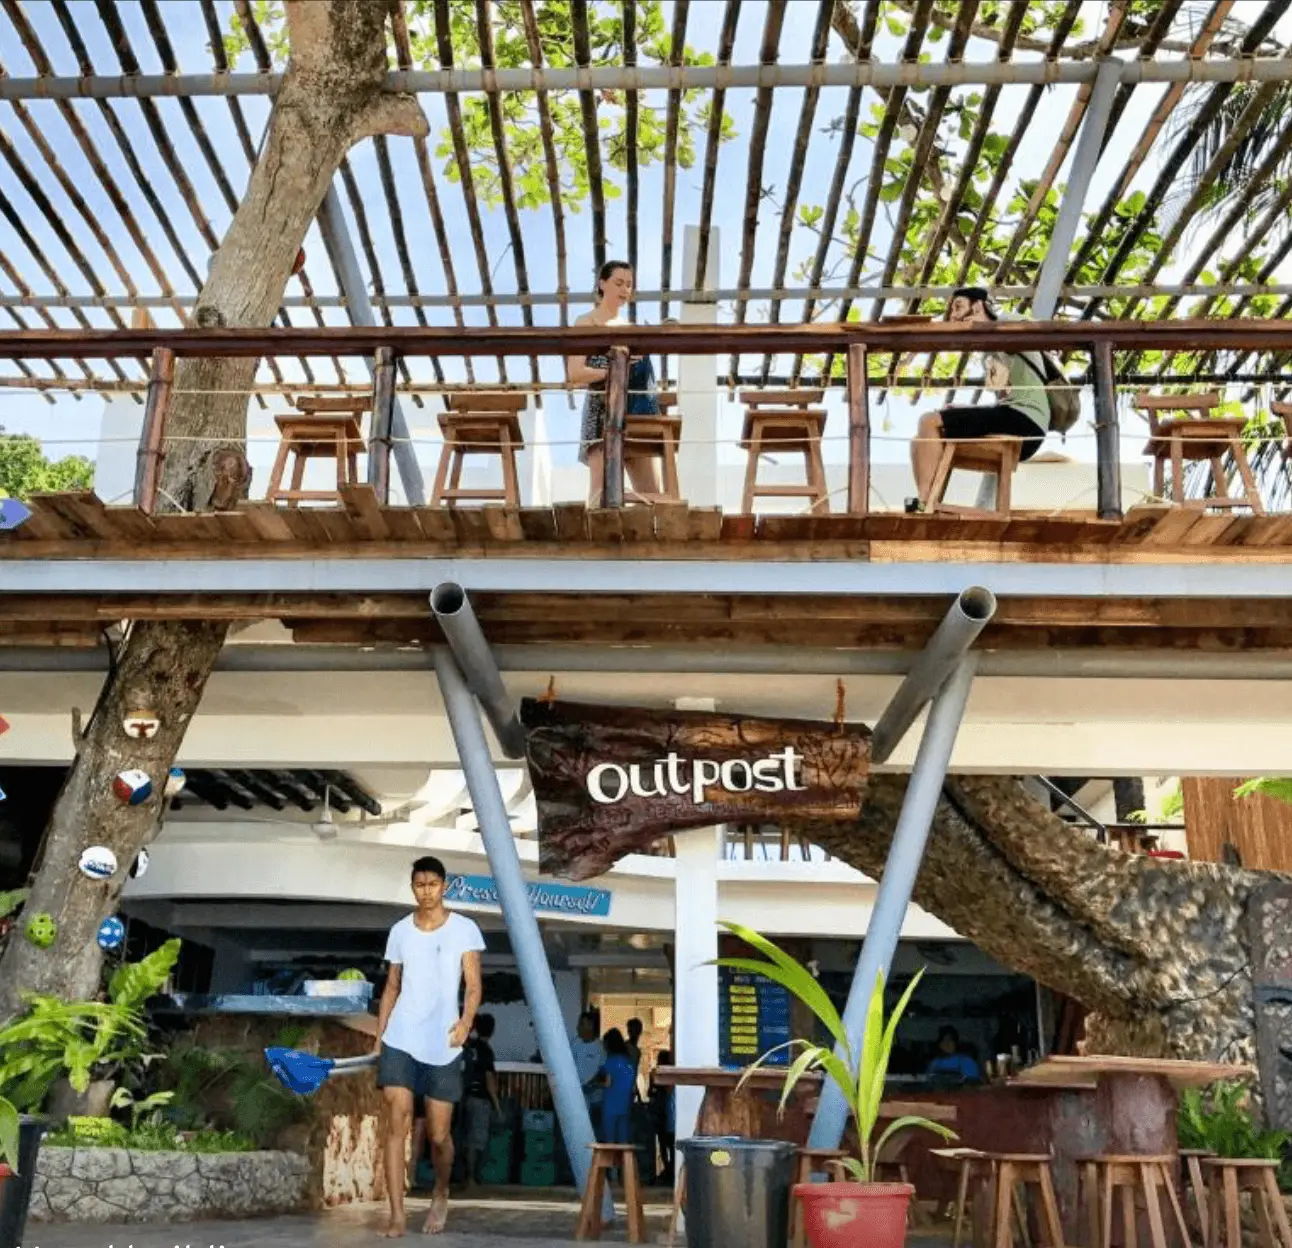 El Nido The Travel Guide - The Outpost Hostel, El Nido, Palawan